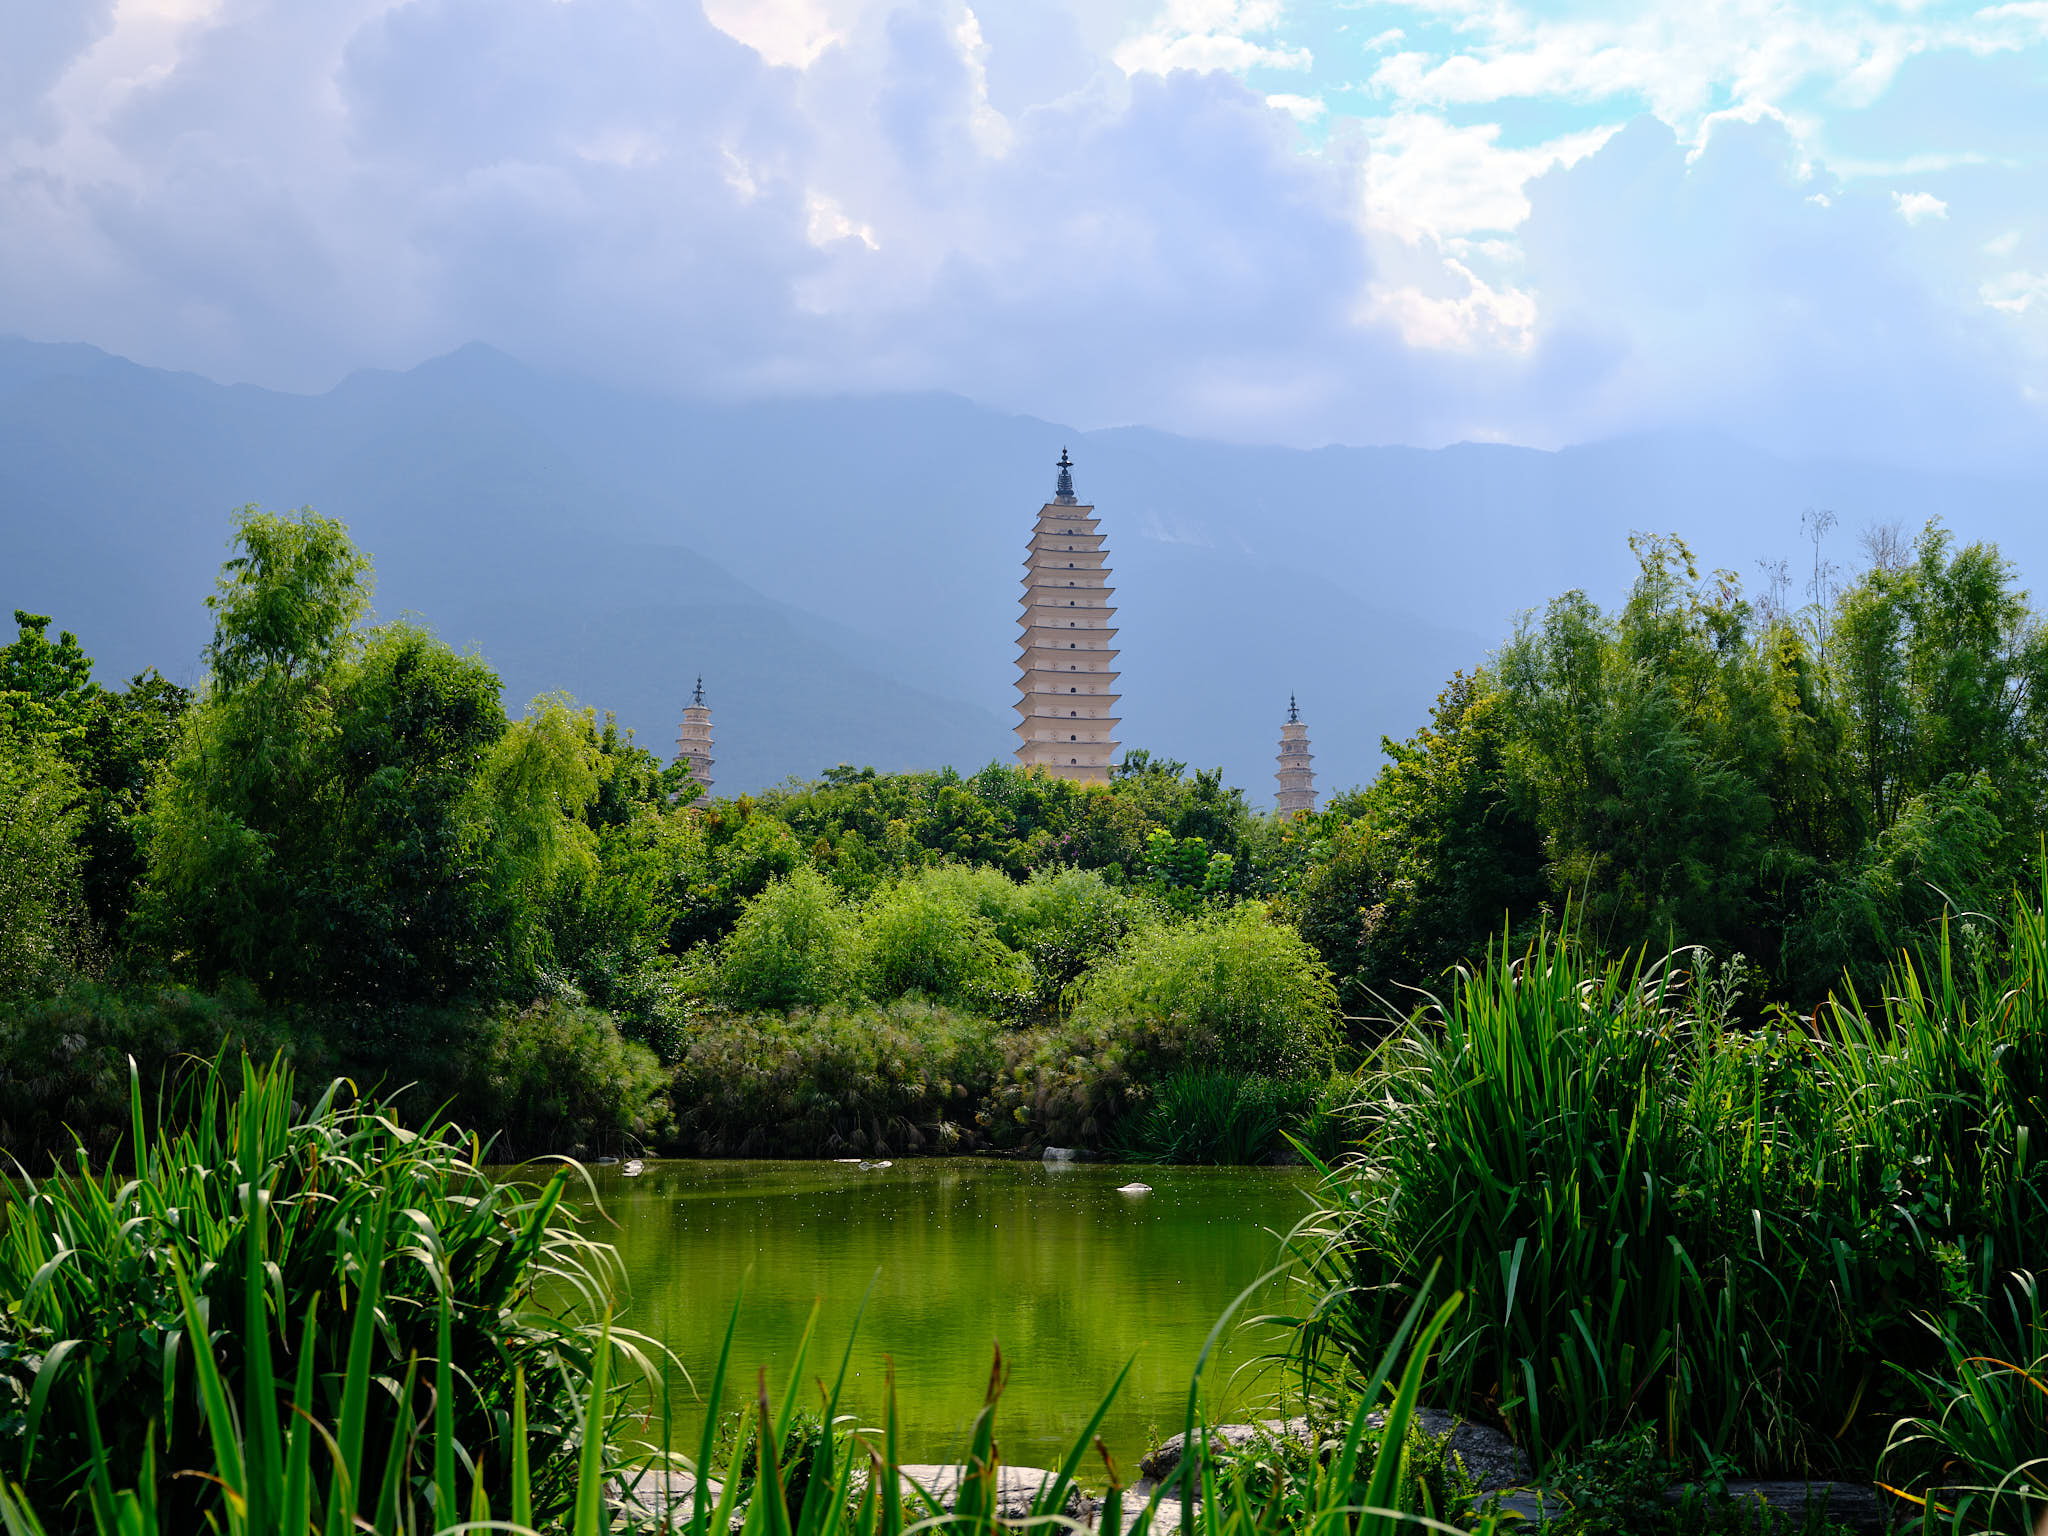 Three Pagodas reflecting in the green lake